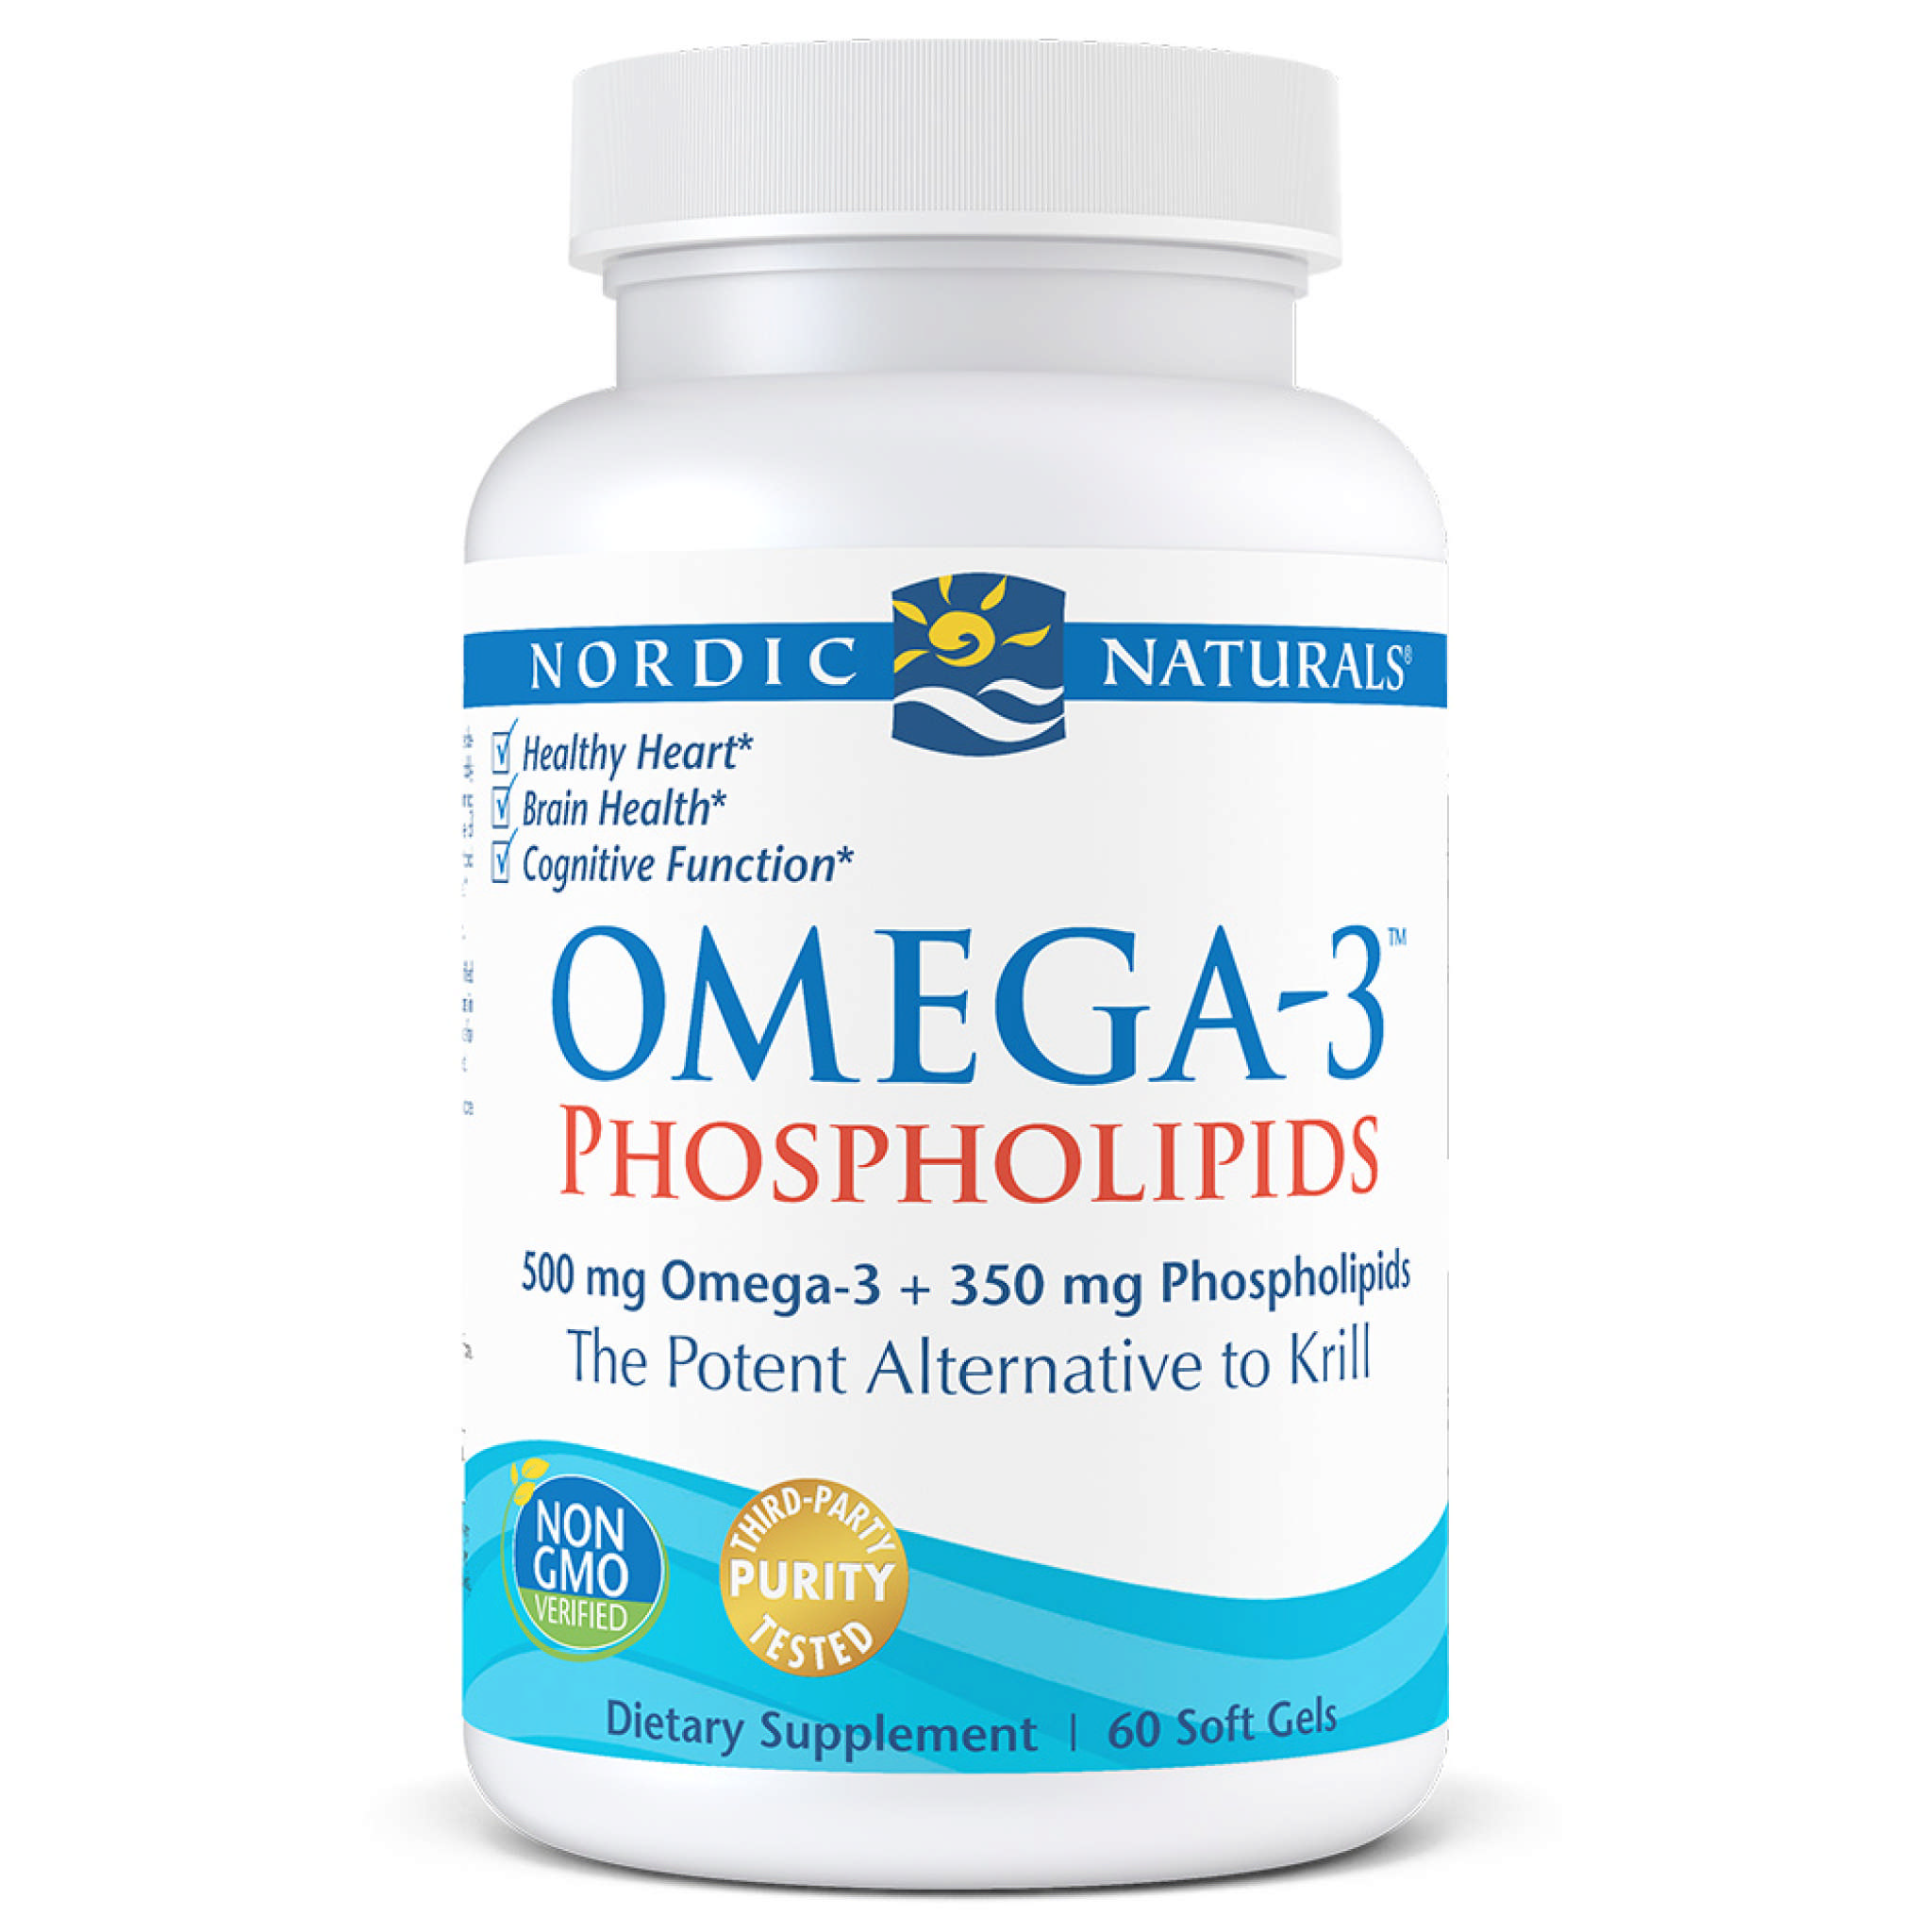 Nordic Naturals - Omega 3 Phospholipids